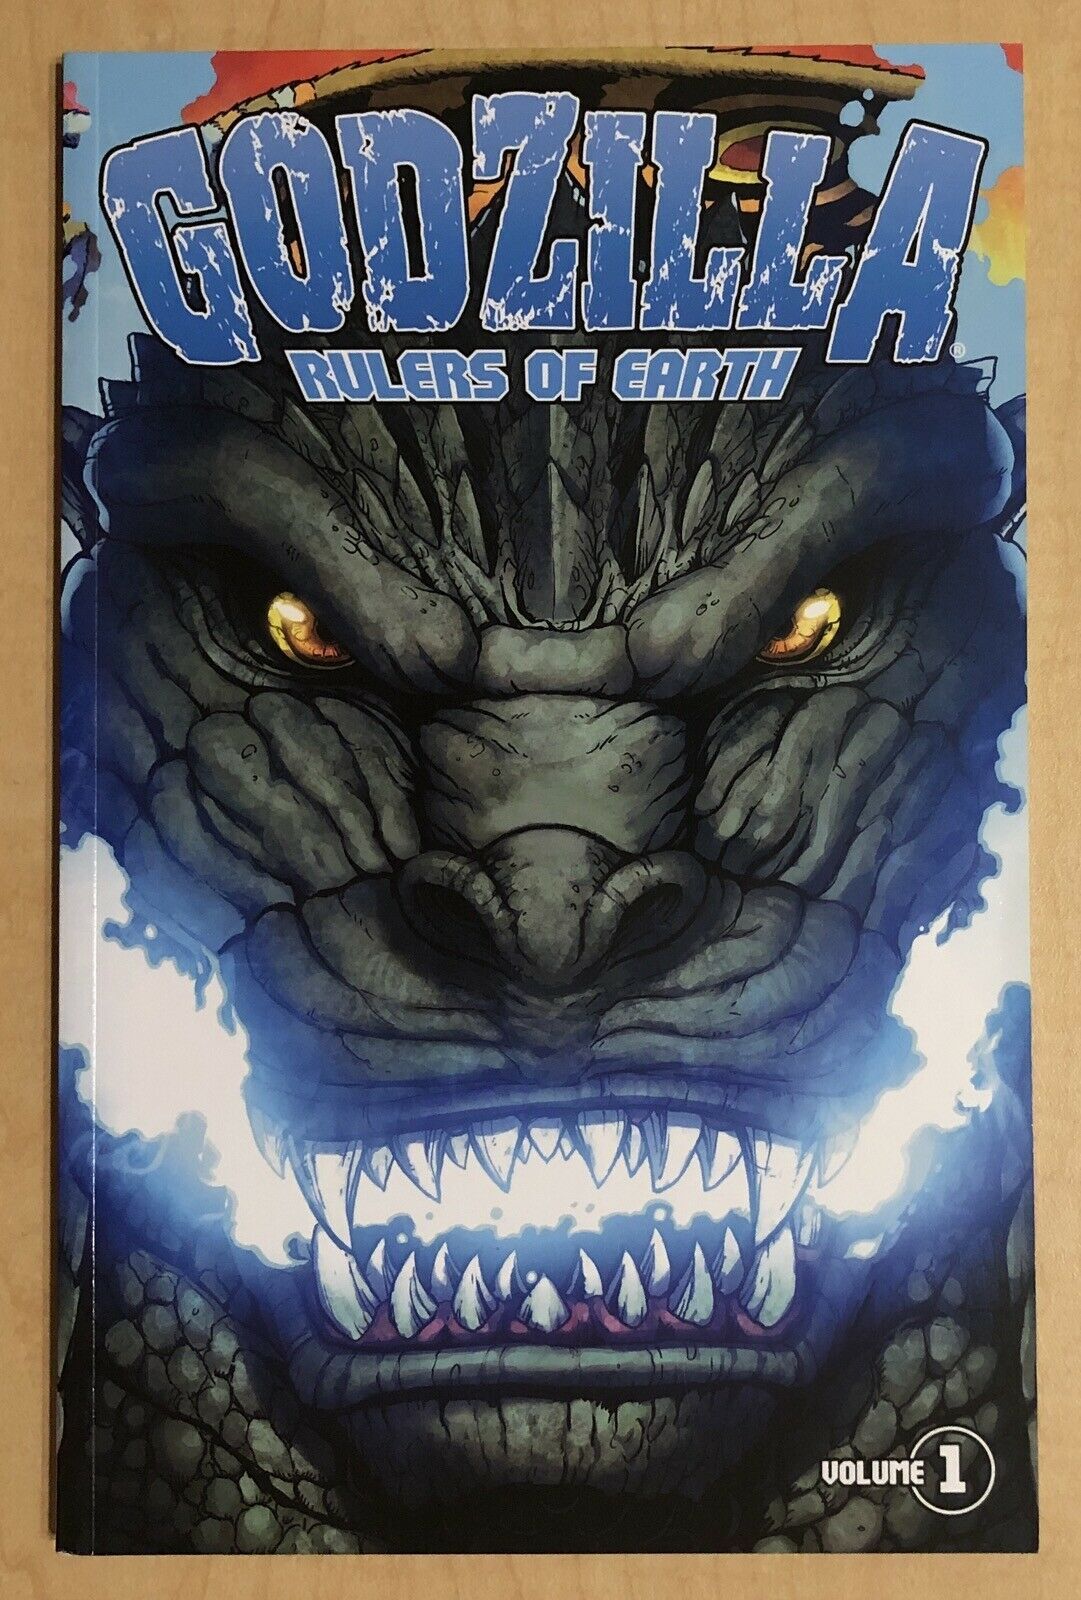 Godzilla: Complete Rulers of Earth Volume 2 (Godzilla Rulers of Earth)